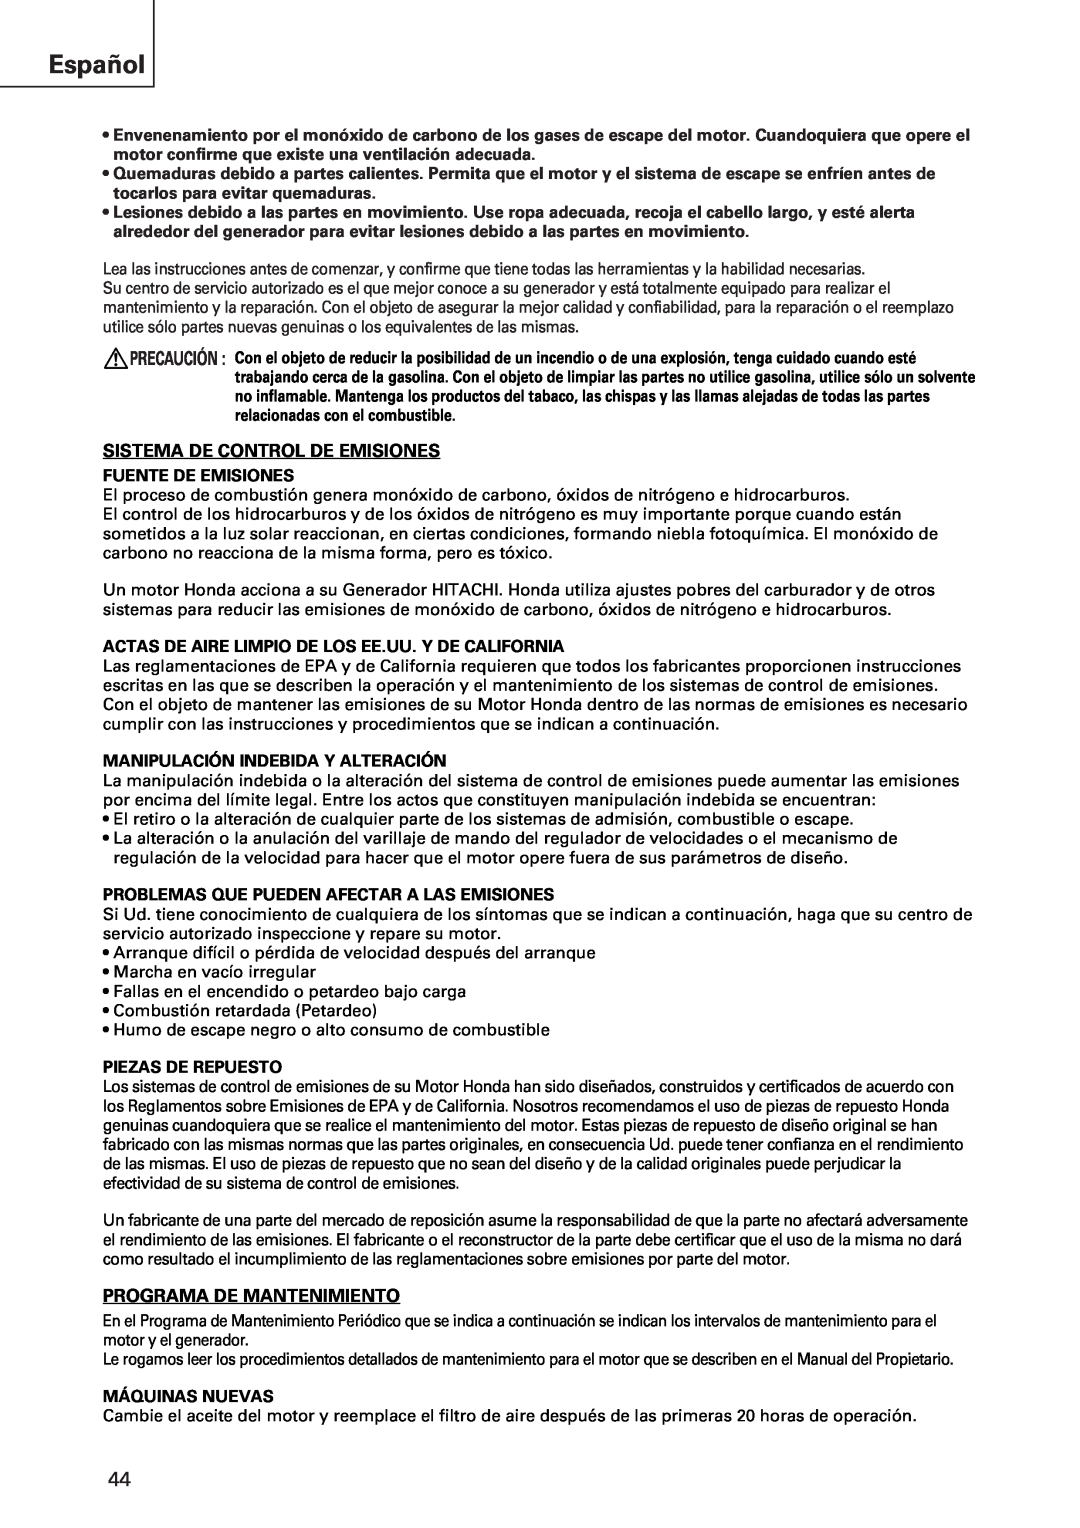 Hitachi E43 instruction manual Español, Sistema De Control De Emisiones, Programa De Mantenimiento 